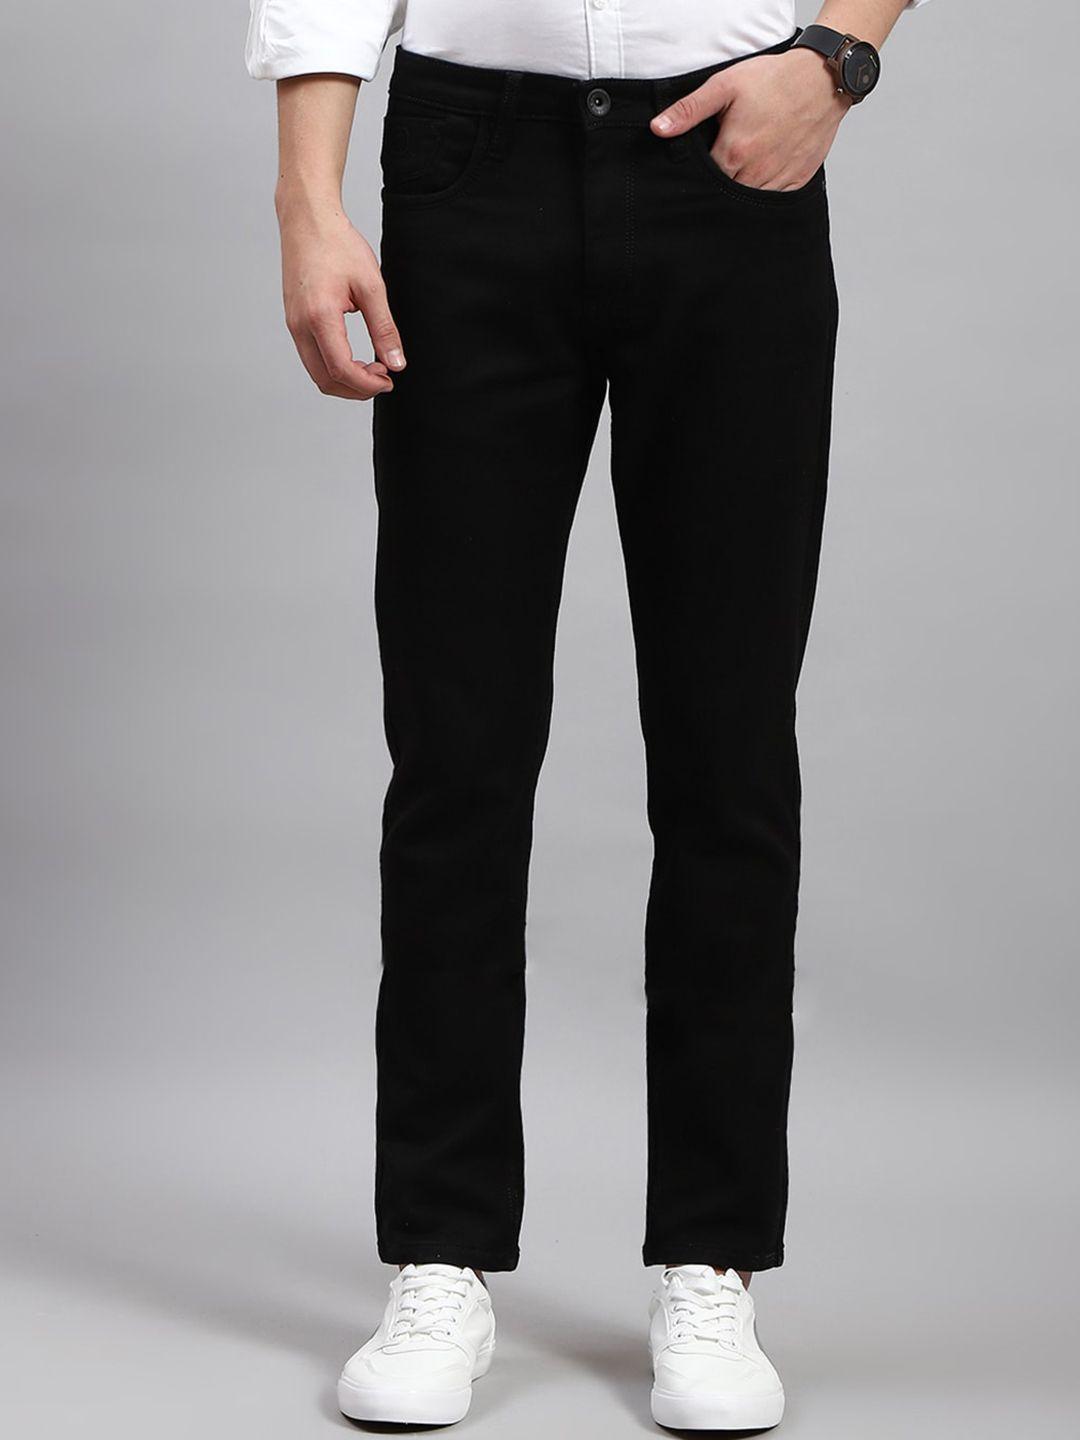 monte carlo slim fit mid-rise clean look dark cotton jeans